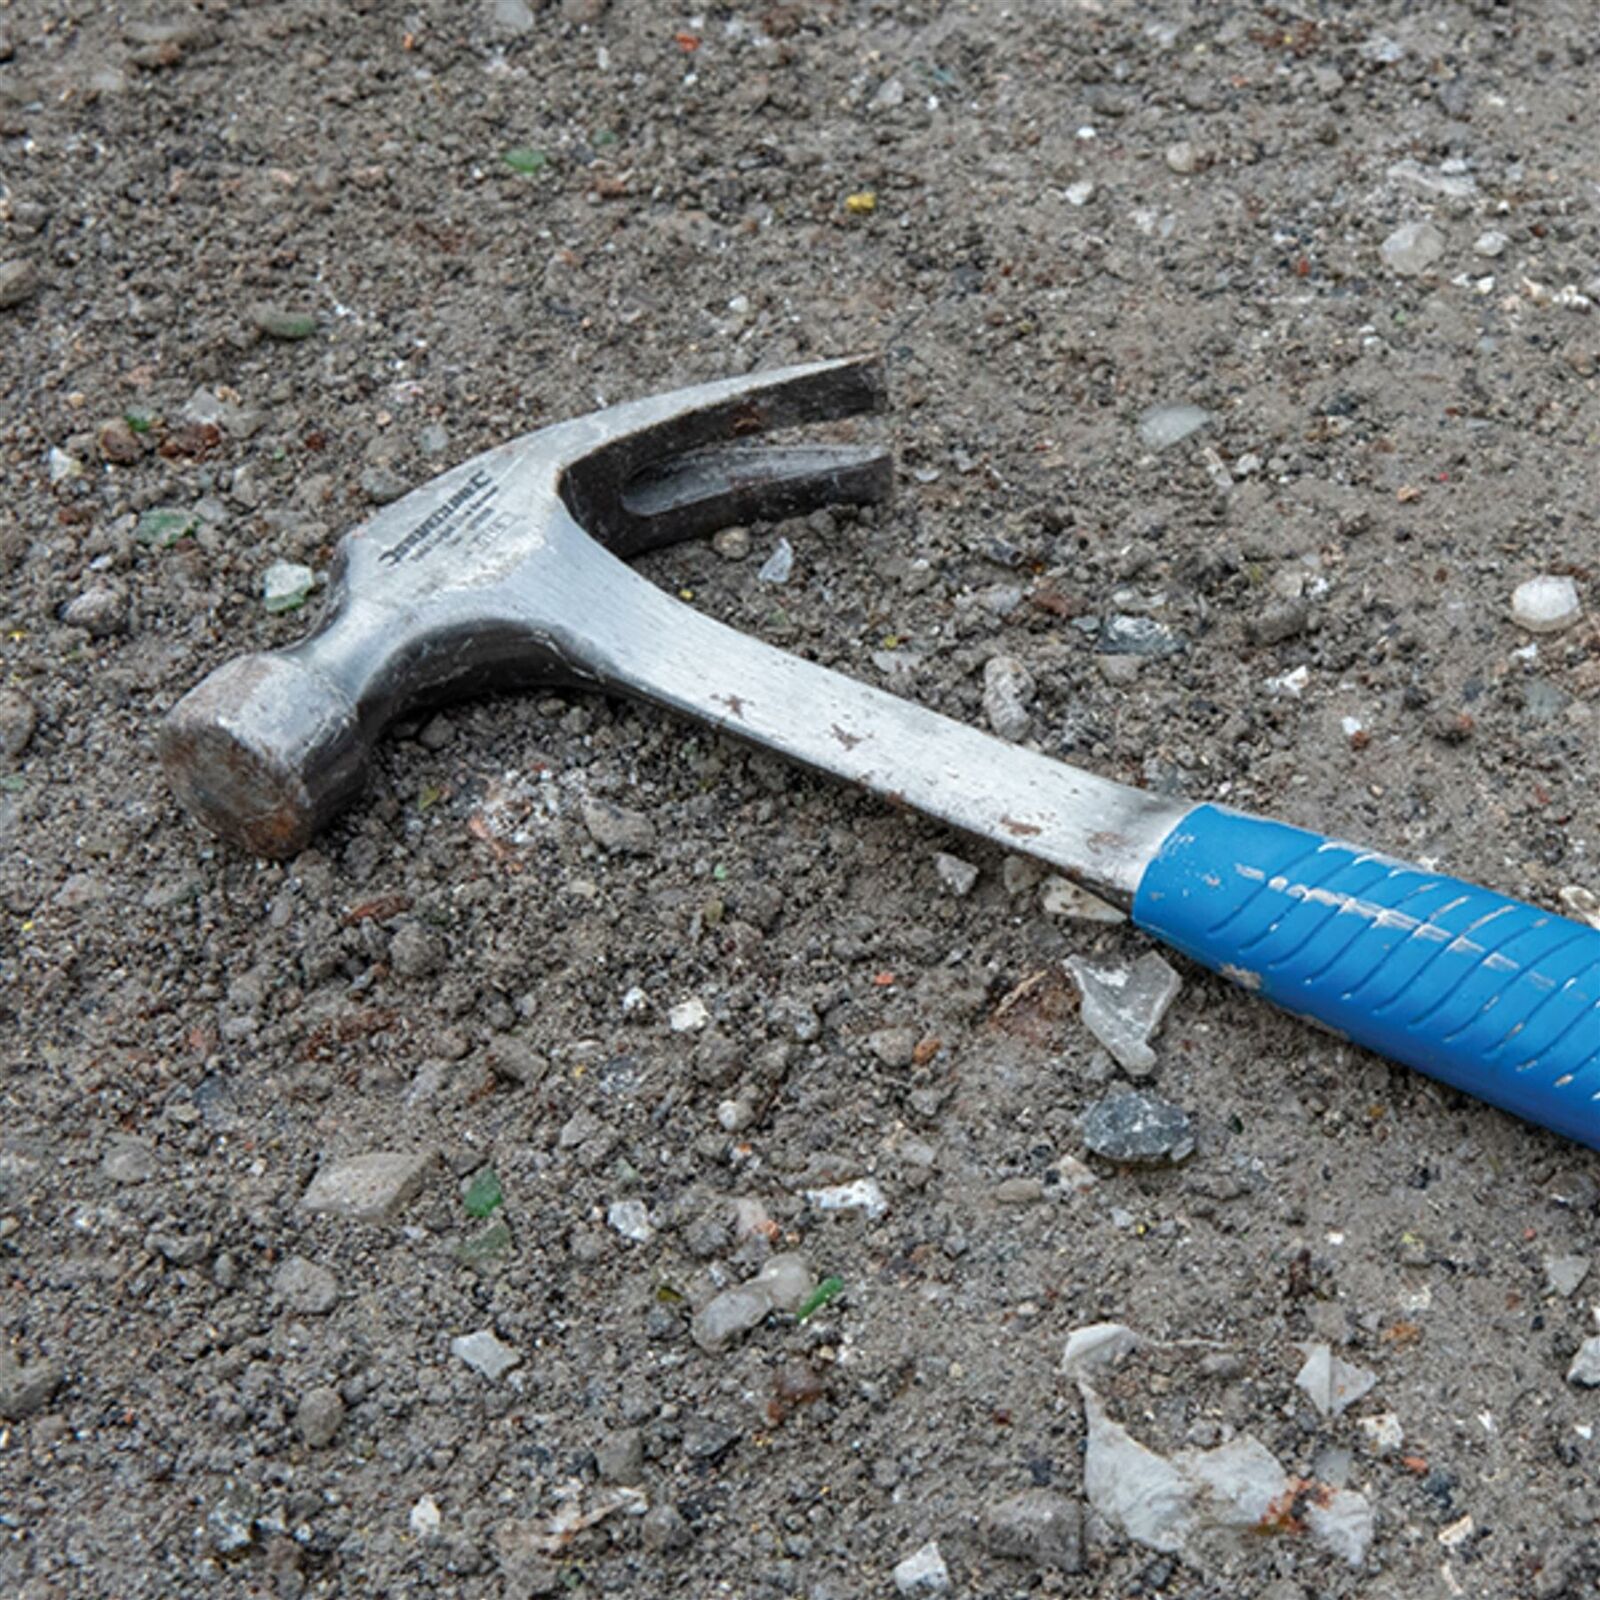 Silverline 20oz Solid Forged Claw Hammer Fibreglass Rubber Grip Handel